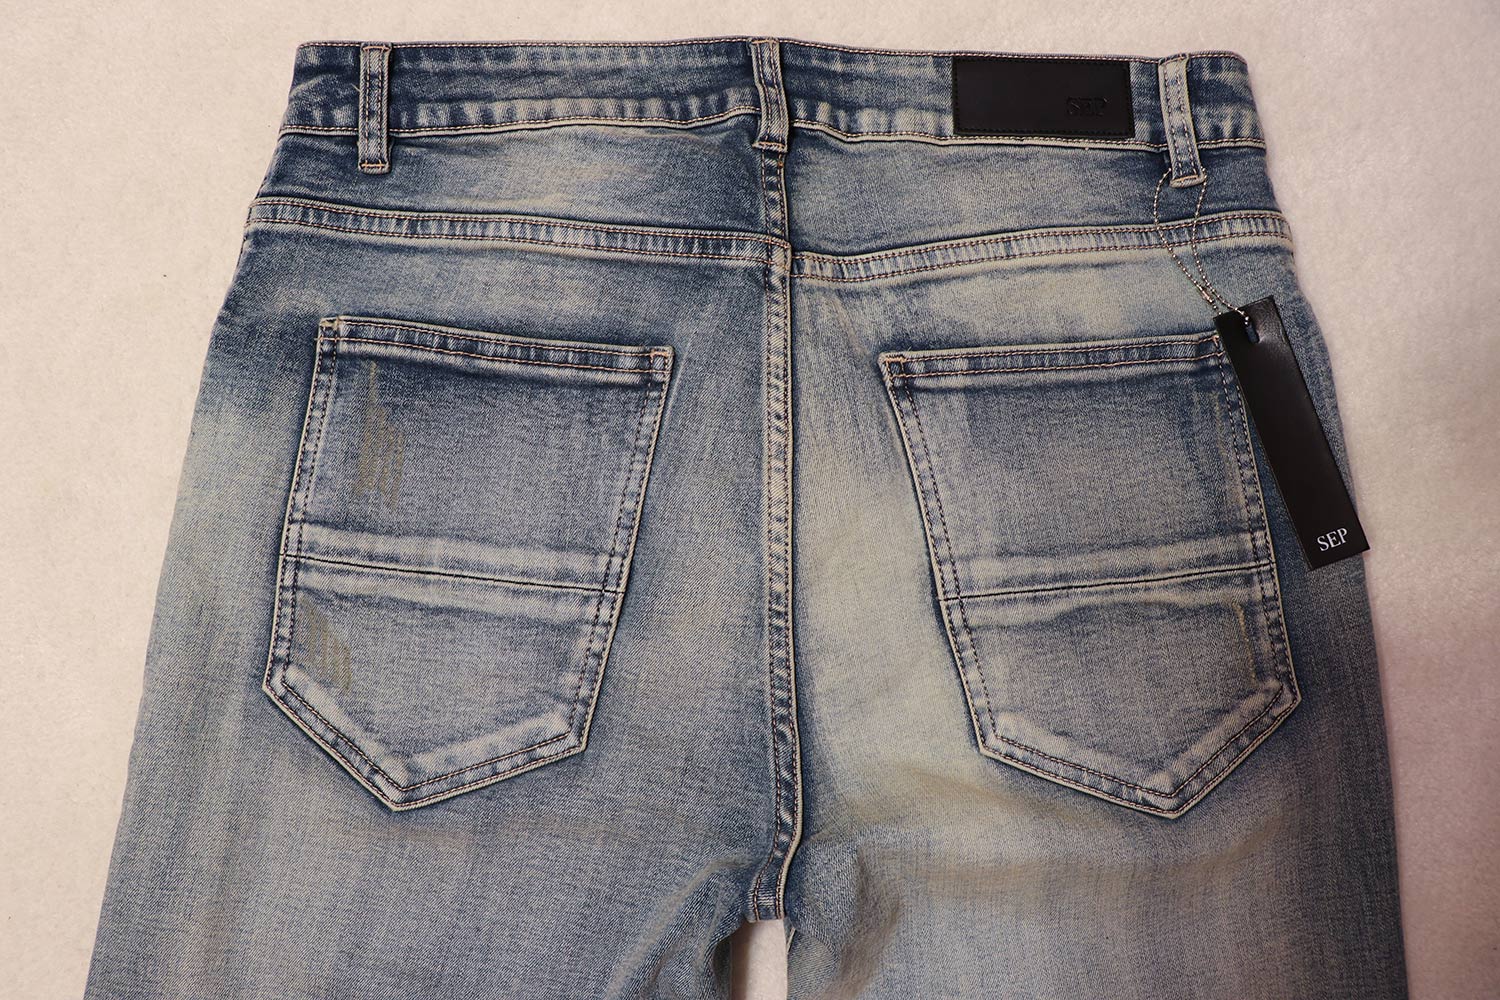 SEP Men’s Skinny Jeans Denim Review - THE JEANS BLOG